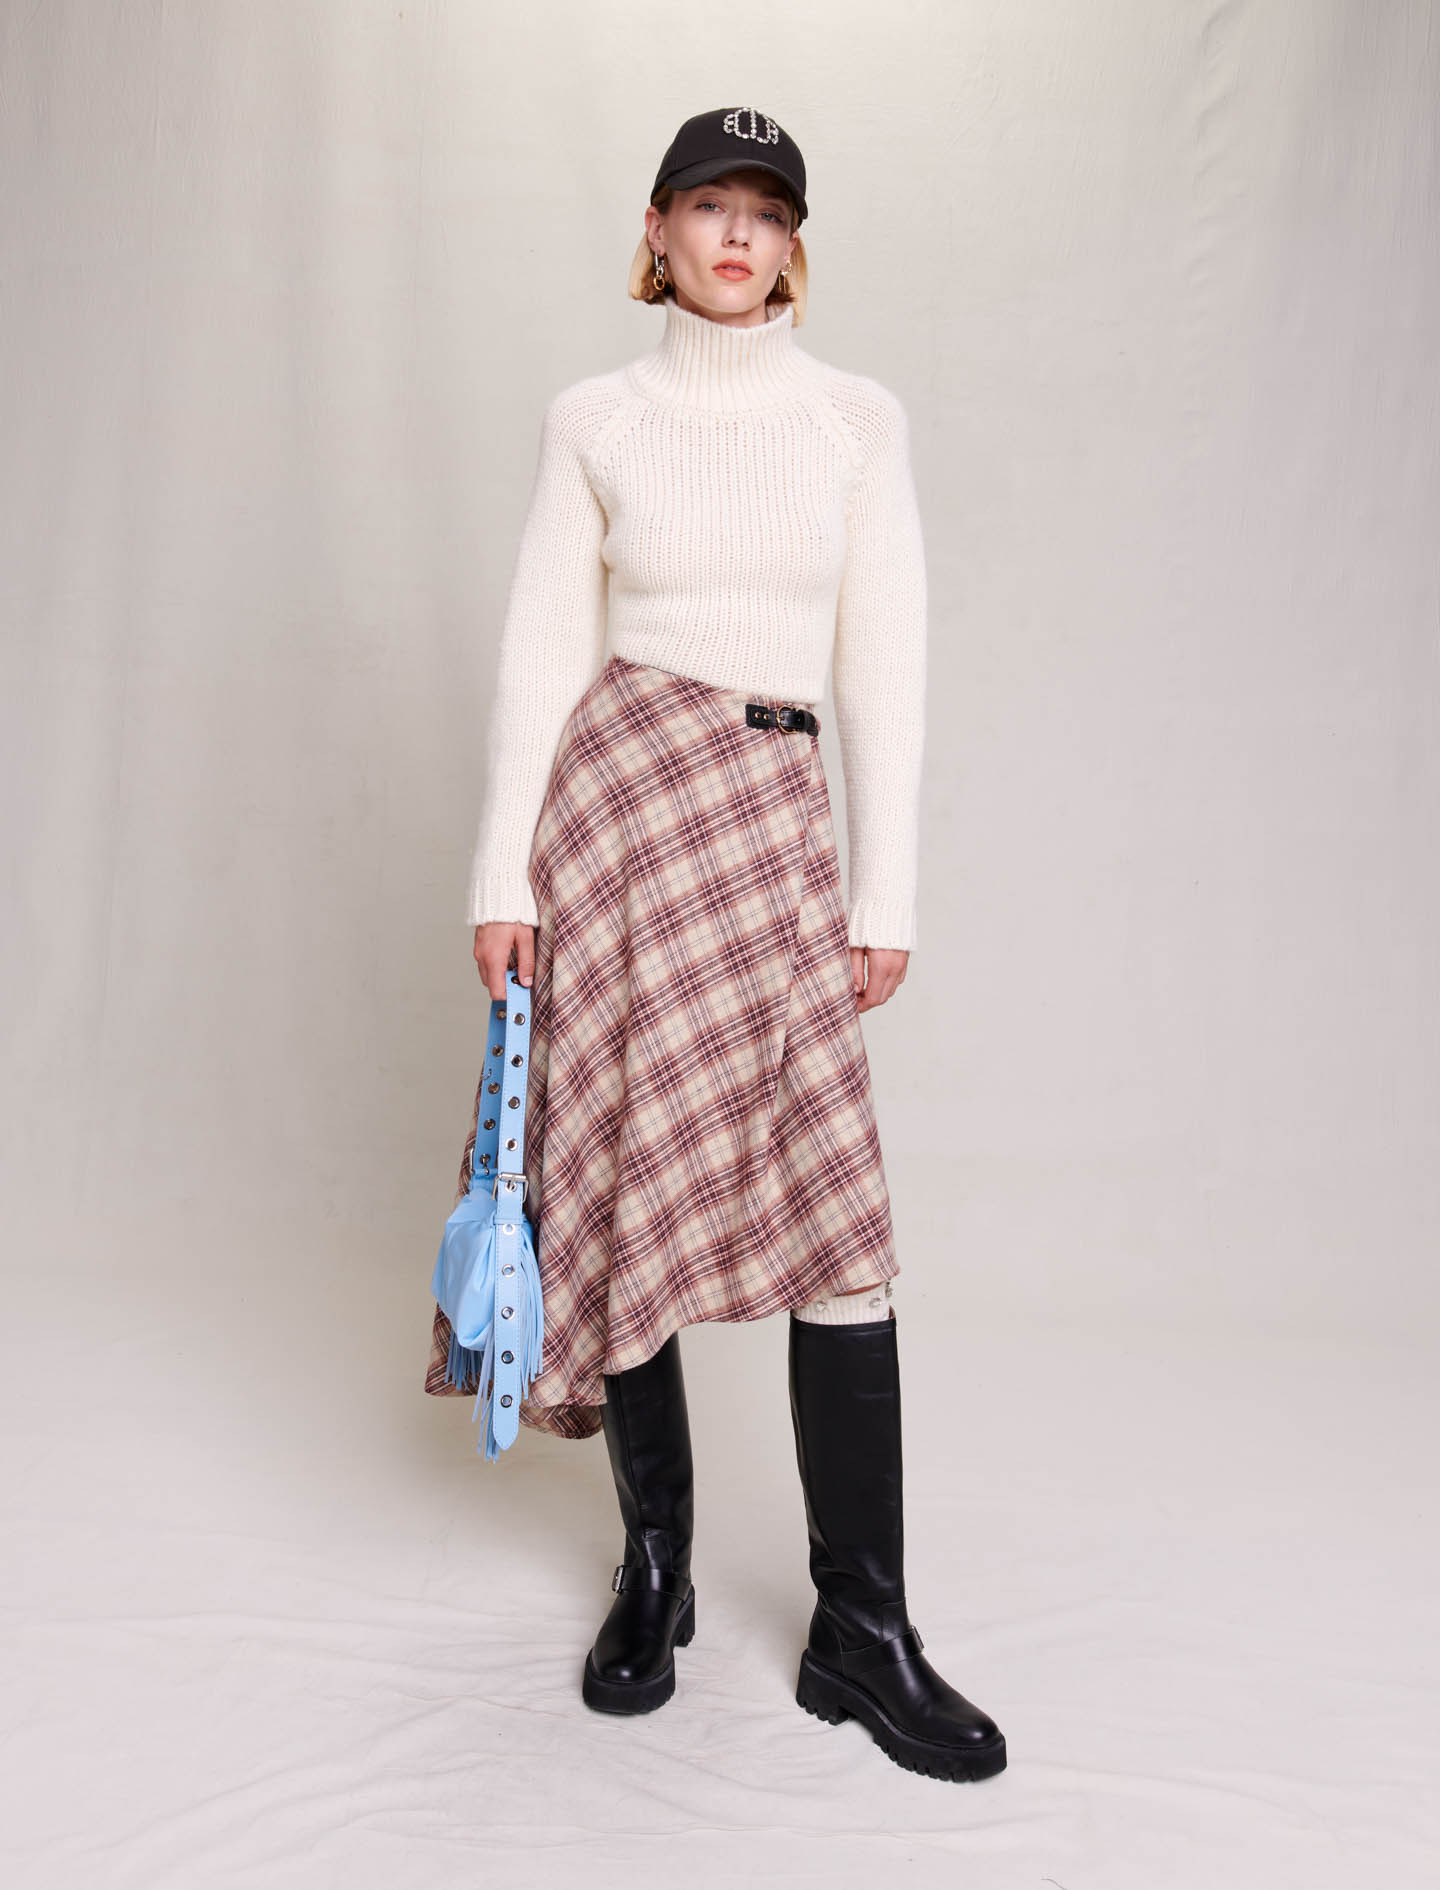 Maje Woman's acrylic, Asymmetrical skirt for Fall/Winter, in color Beige / Beige